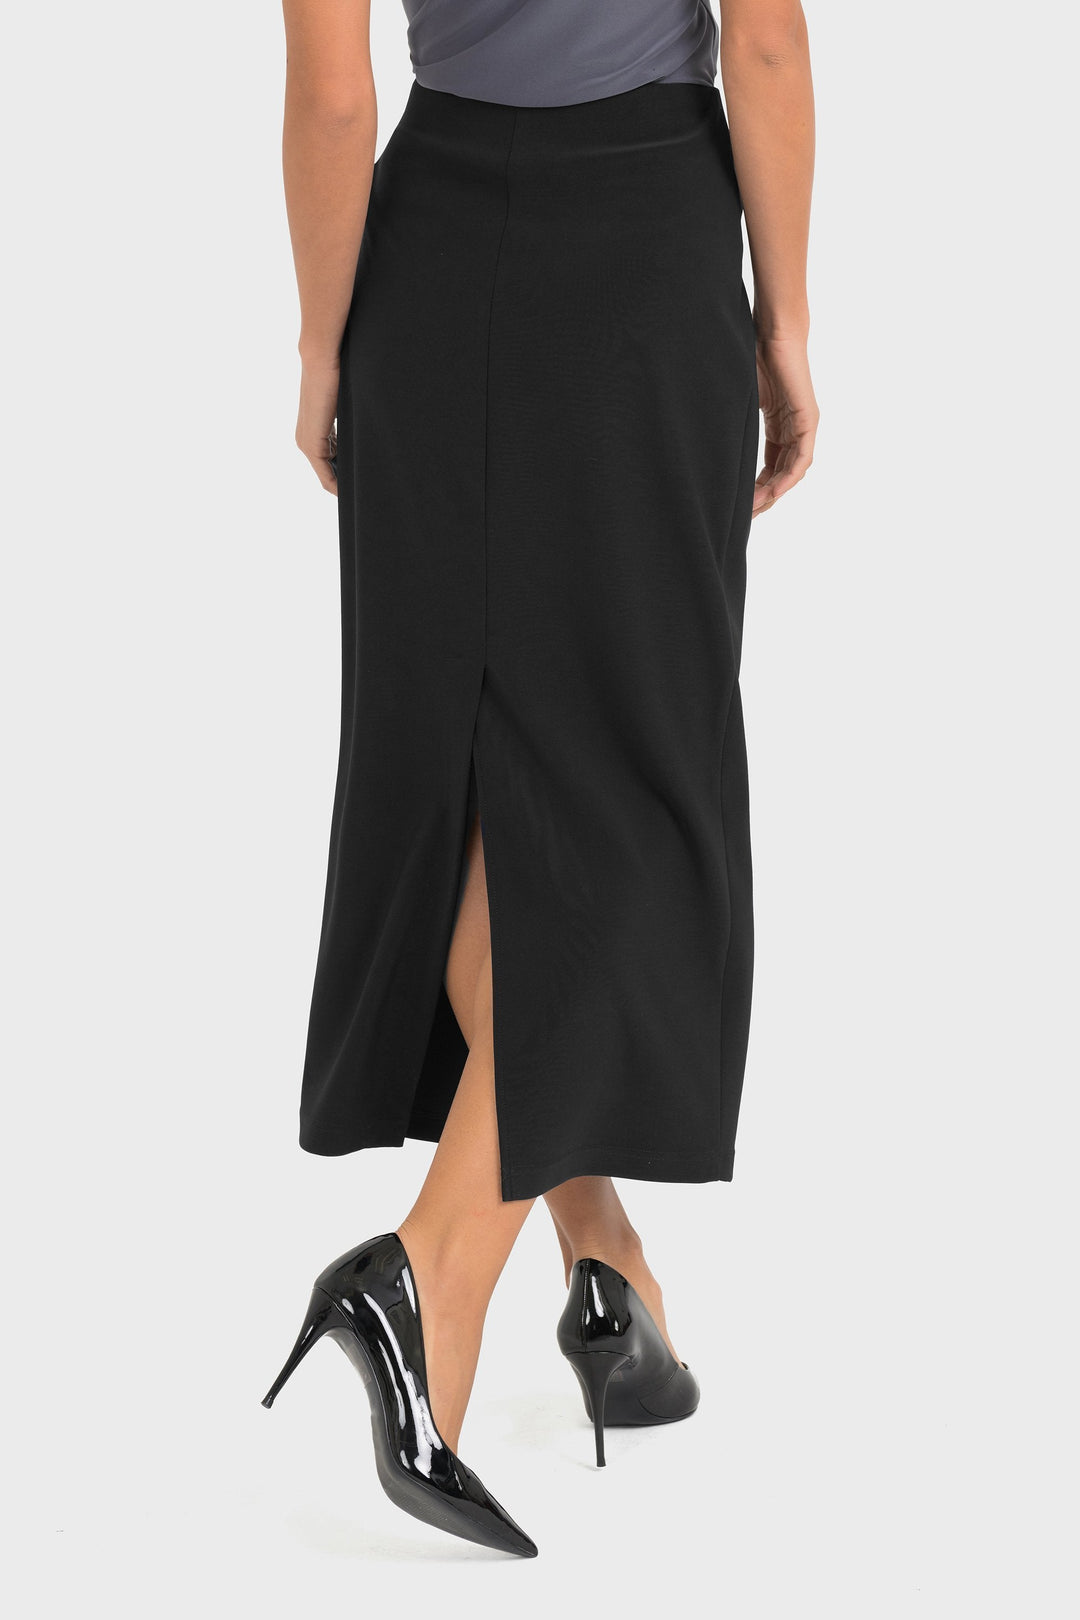 Joseph Ribkoff Skirt Style 193092 - Modella Signature